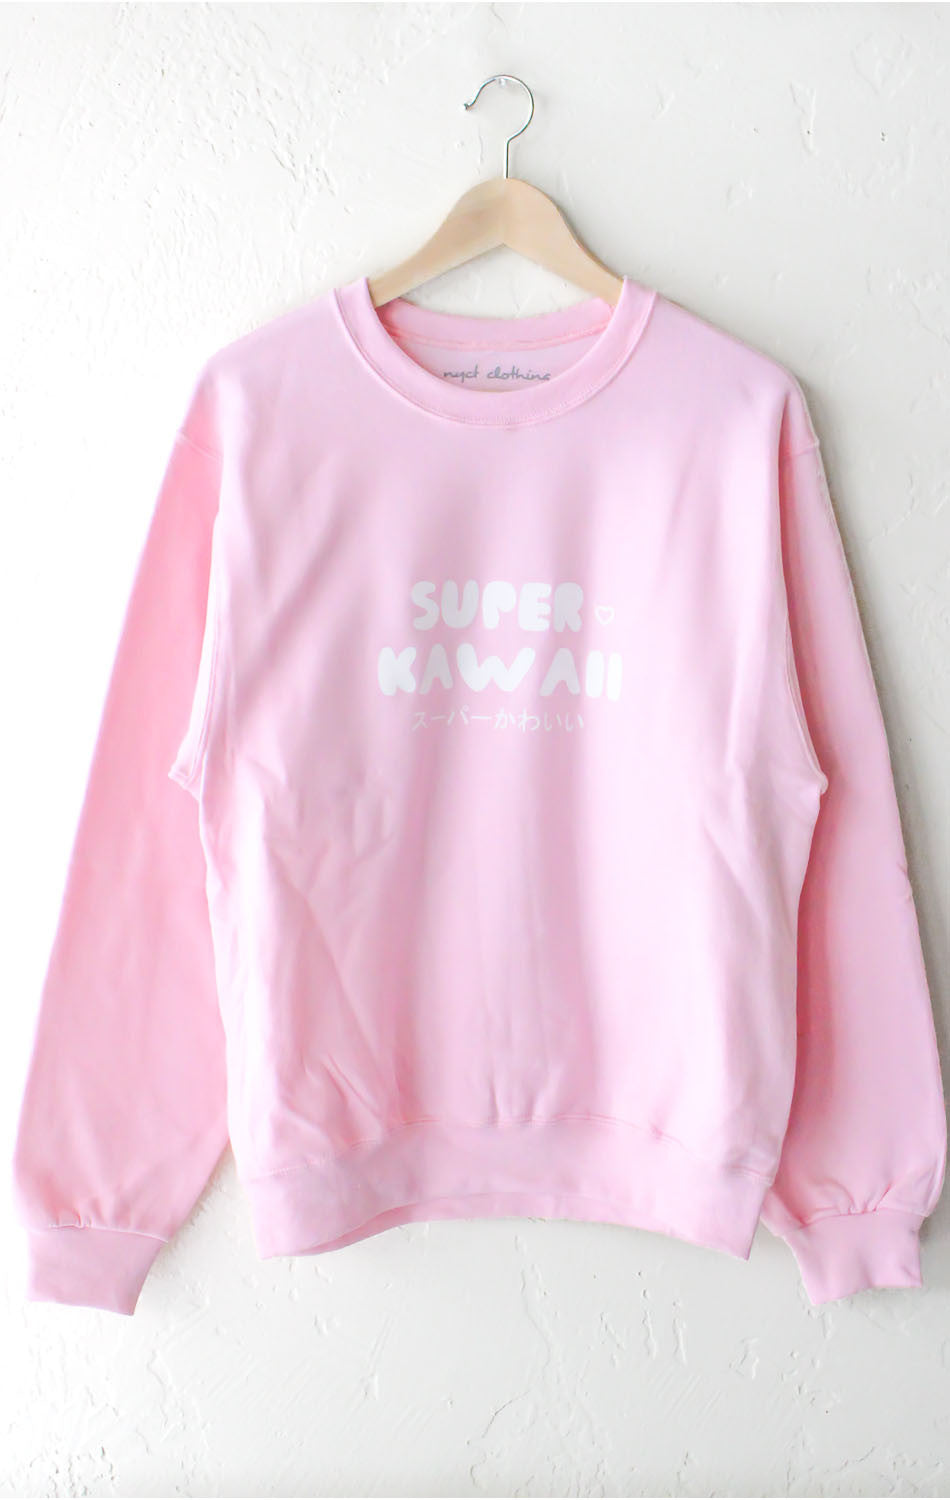 Super Kawaii Sweatshirt - Pink - NYCT CLOTHING